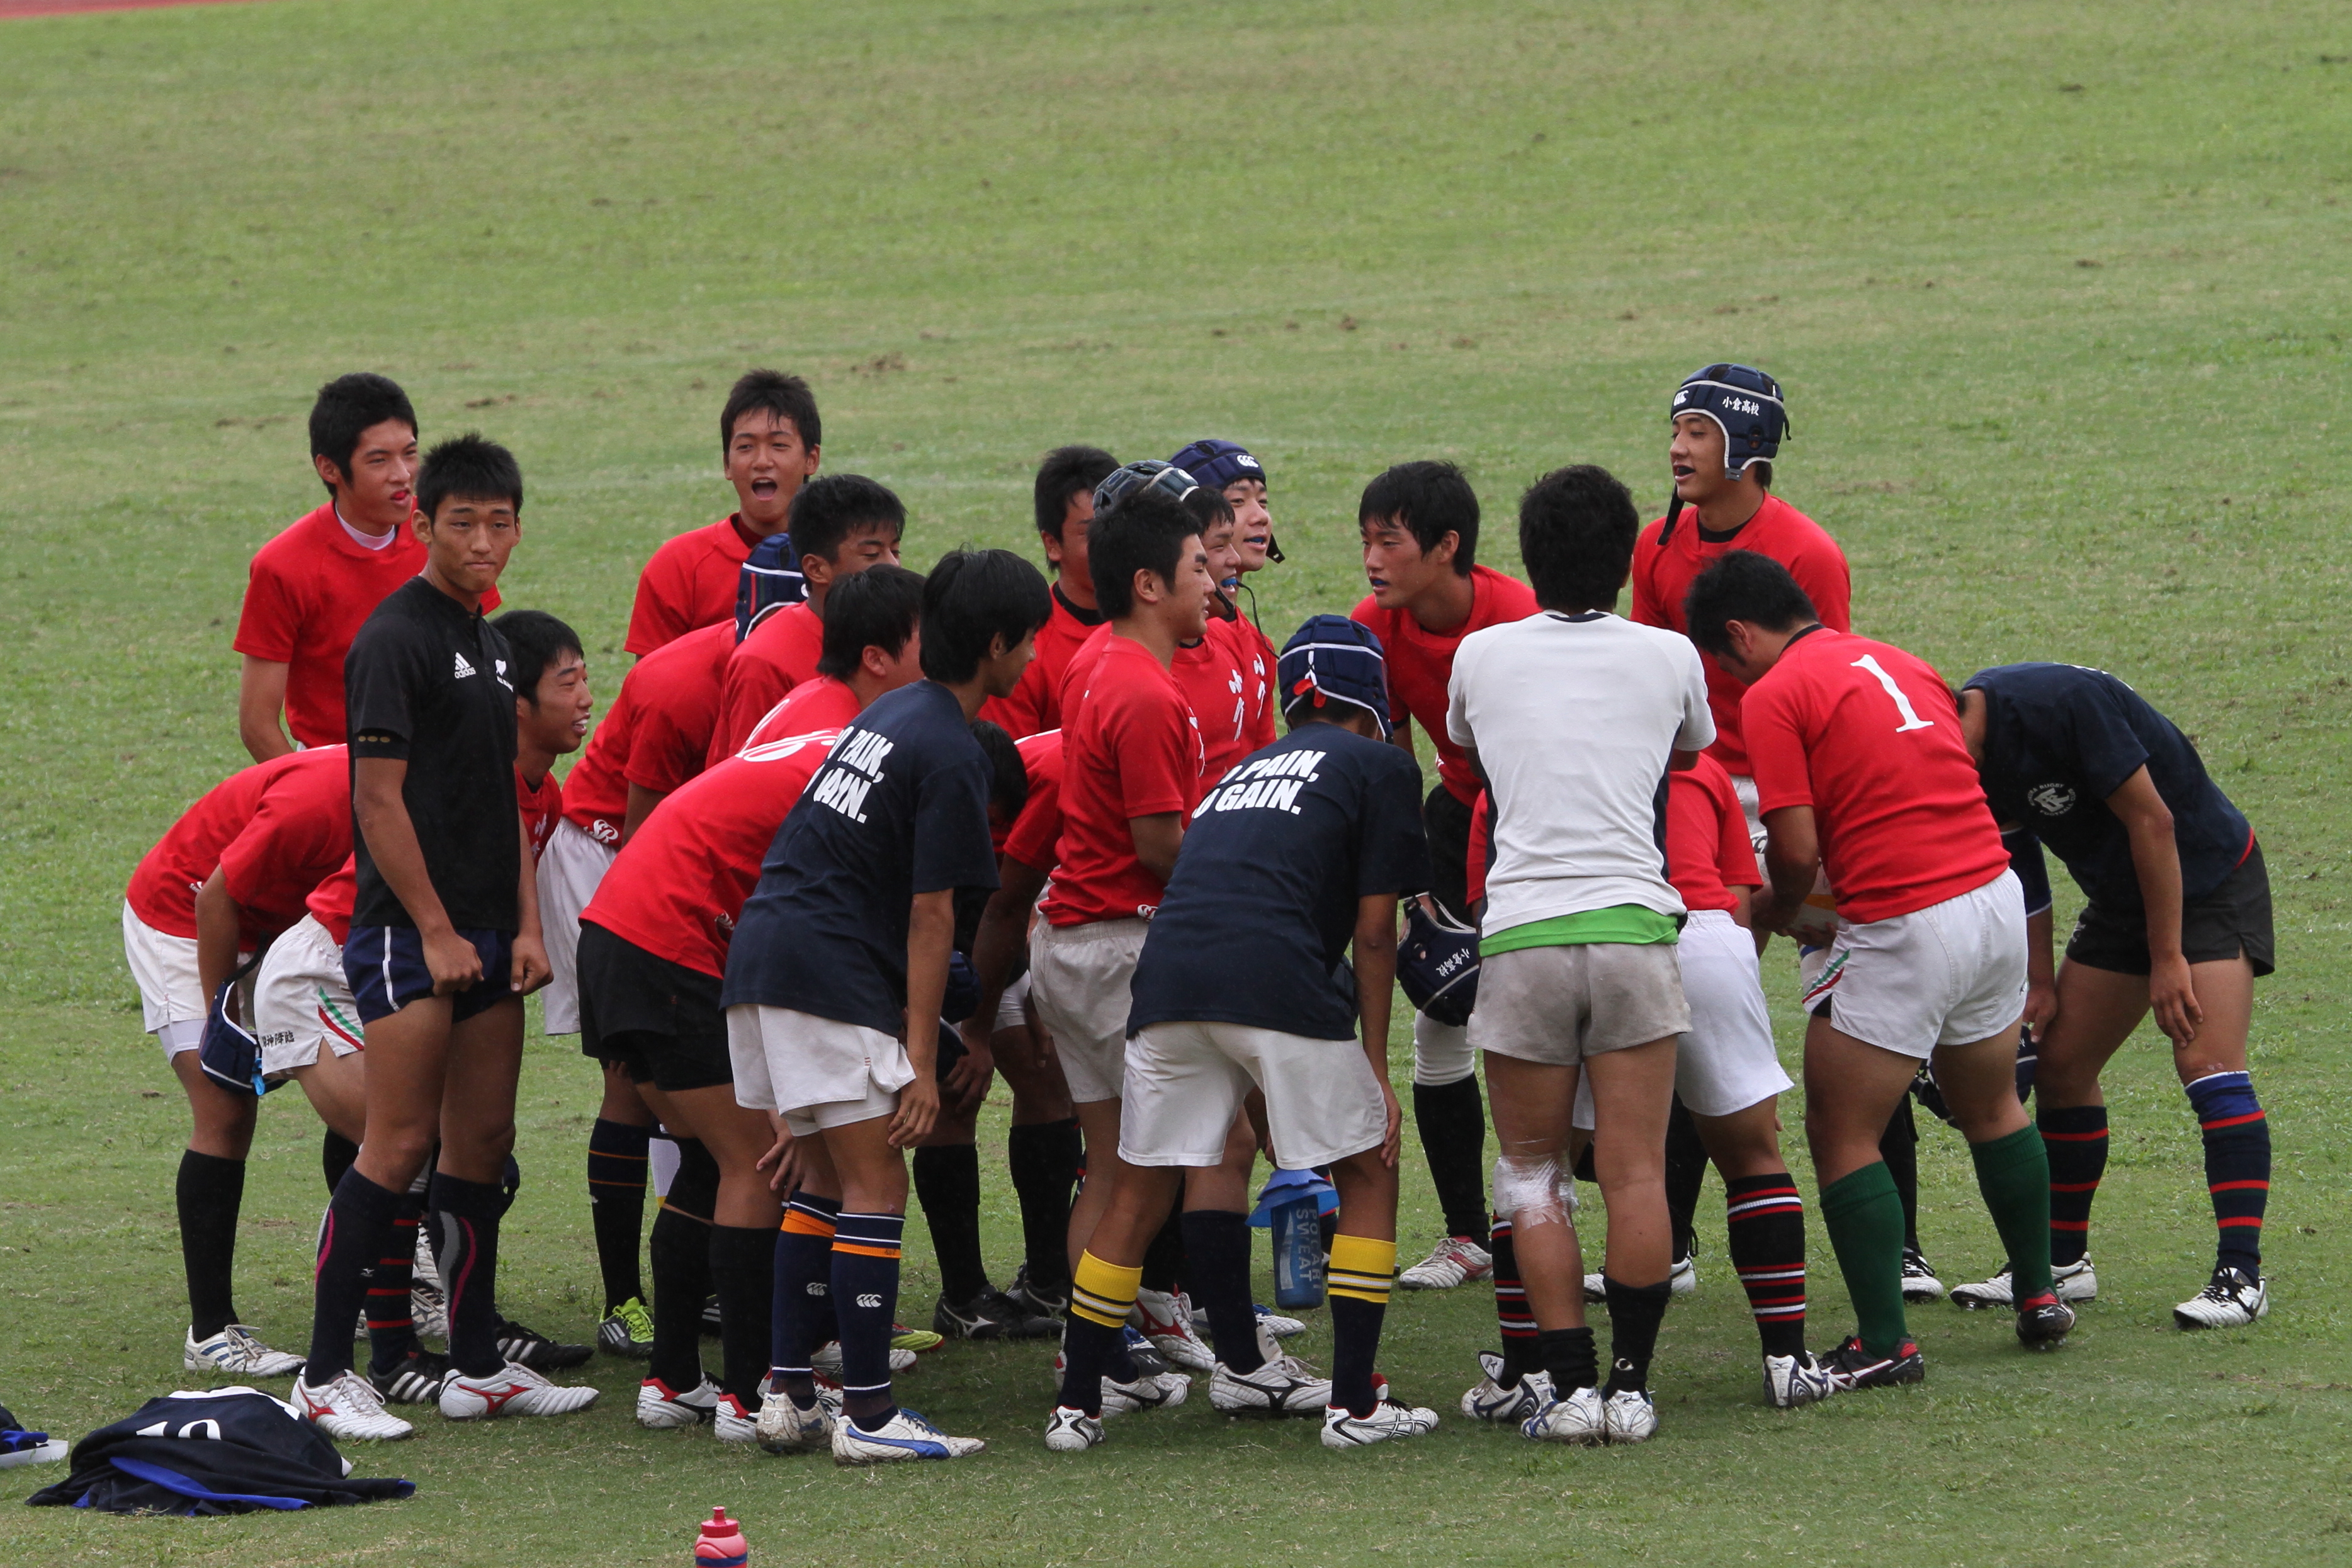 http://kokura-rugby.sakura.ne.jp/2011.9.19-17.JPG